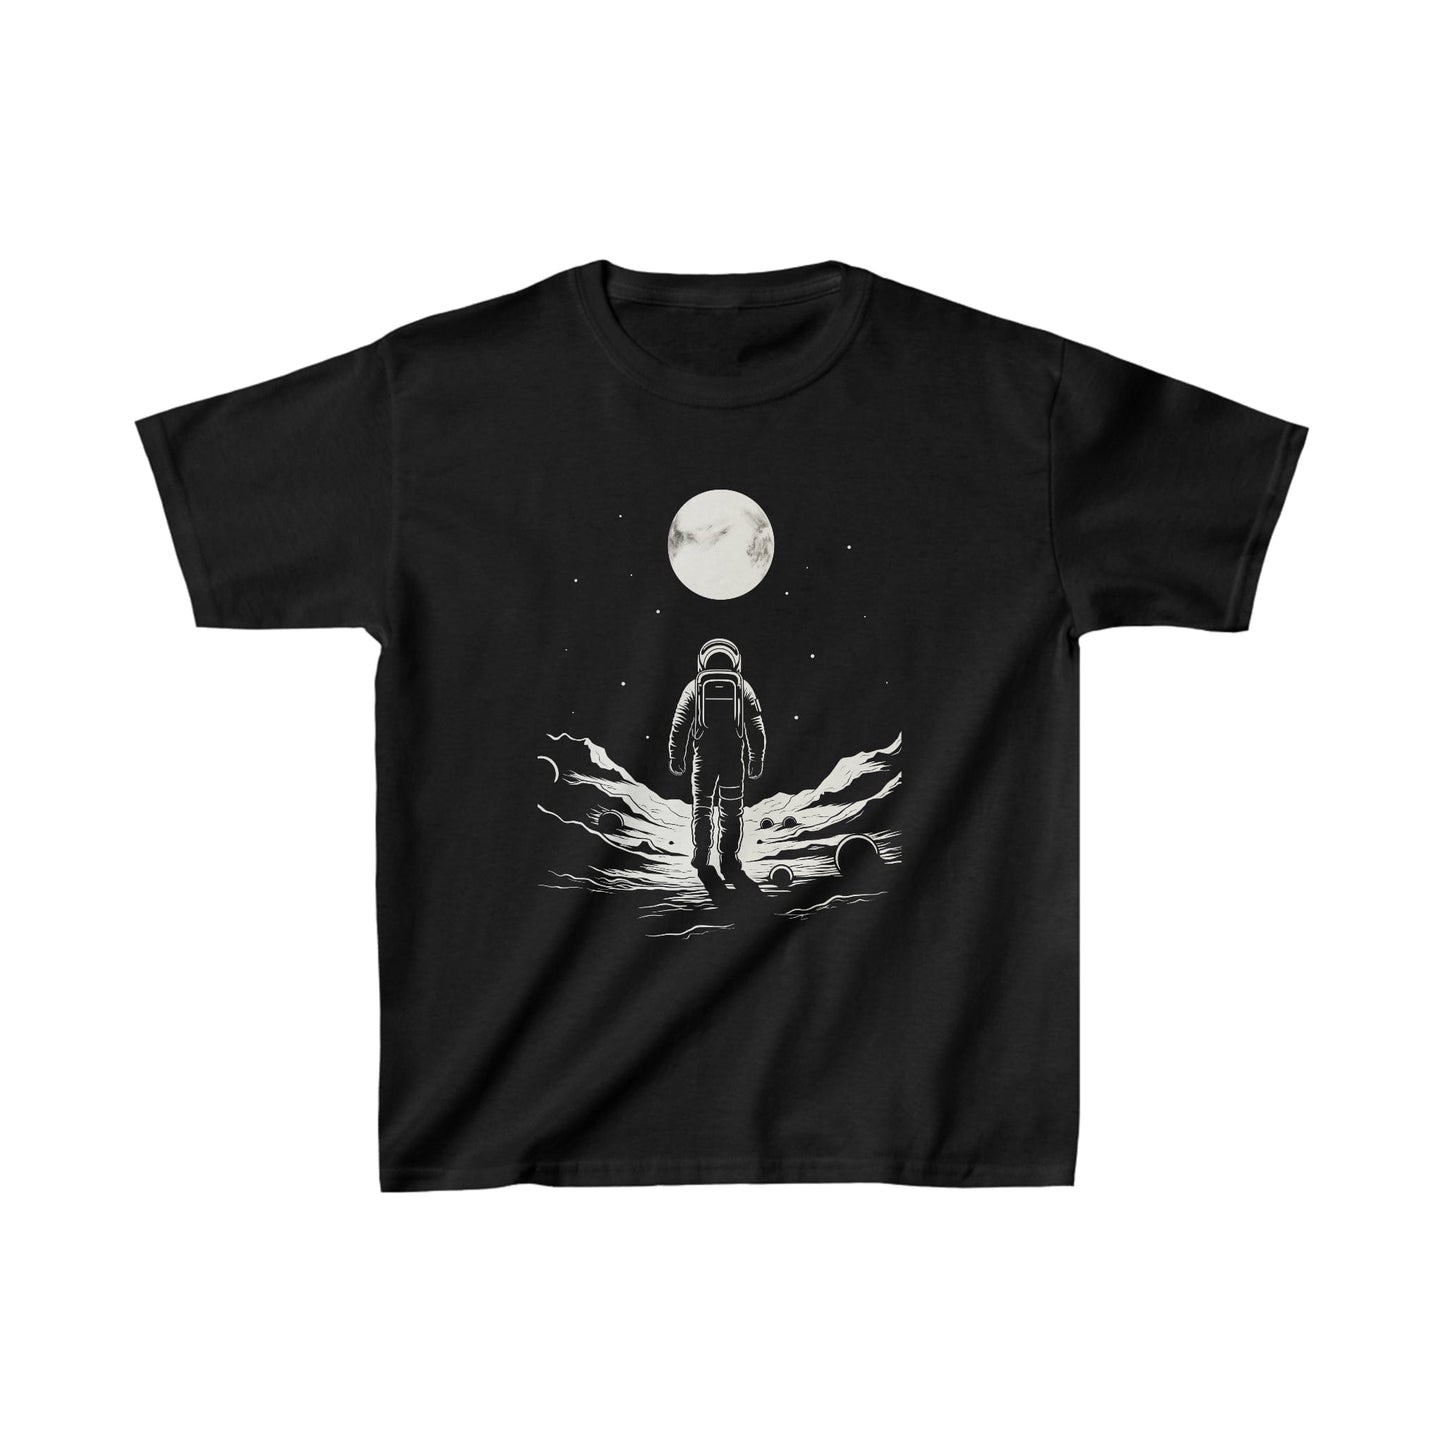 Kids clothes XS / Black Youth Lone Astronaut Moon Explorer T-Shirt